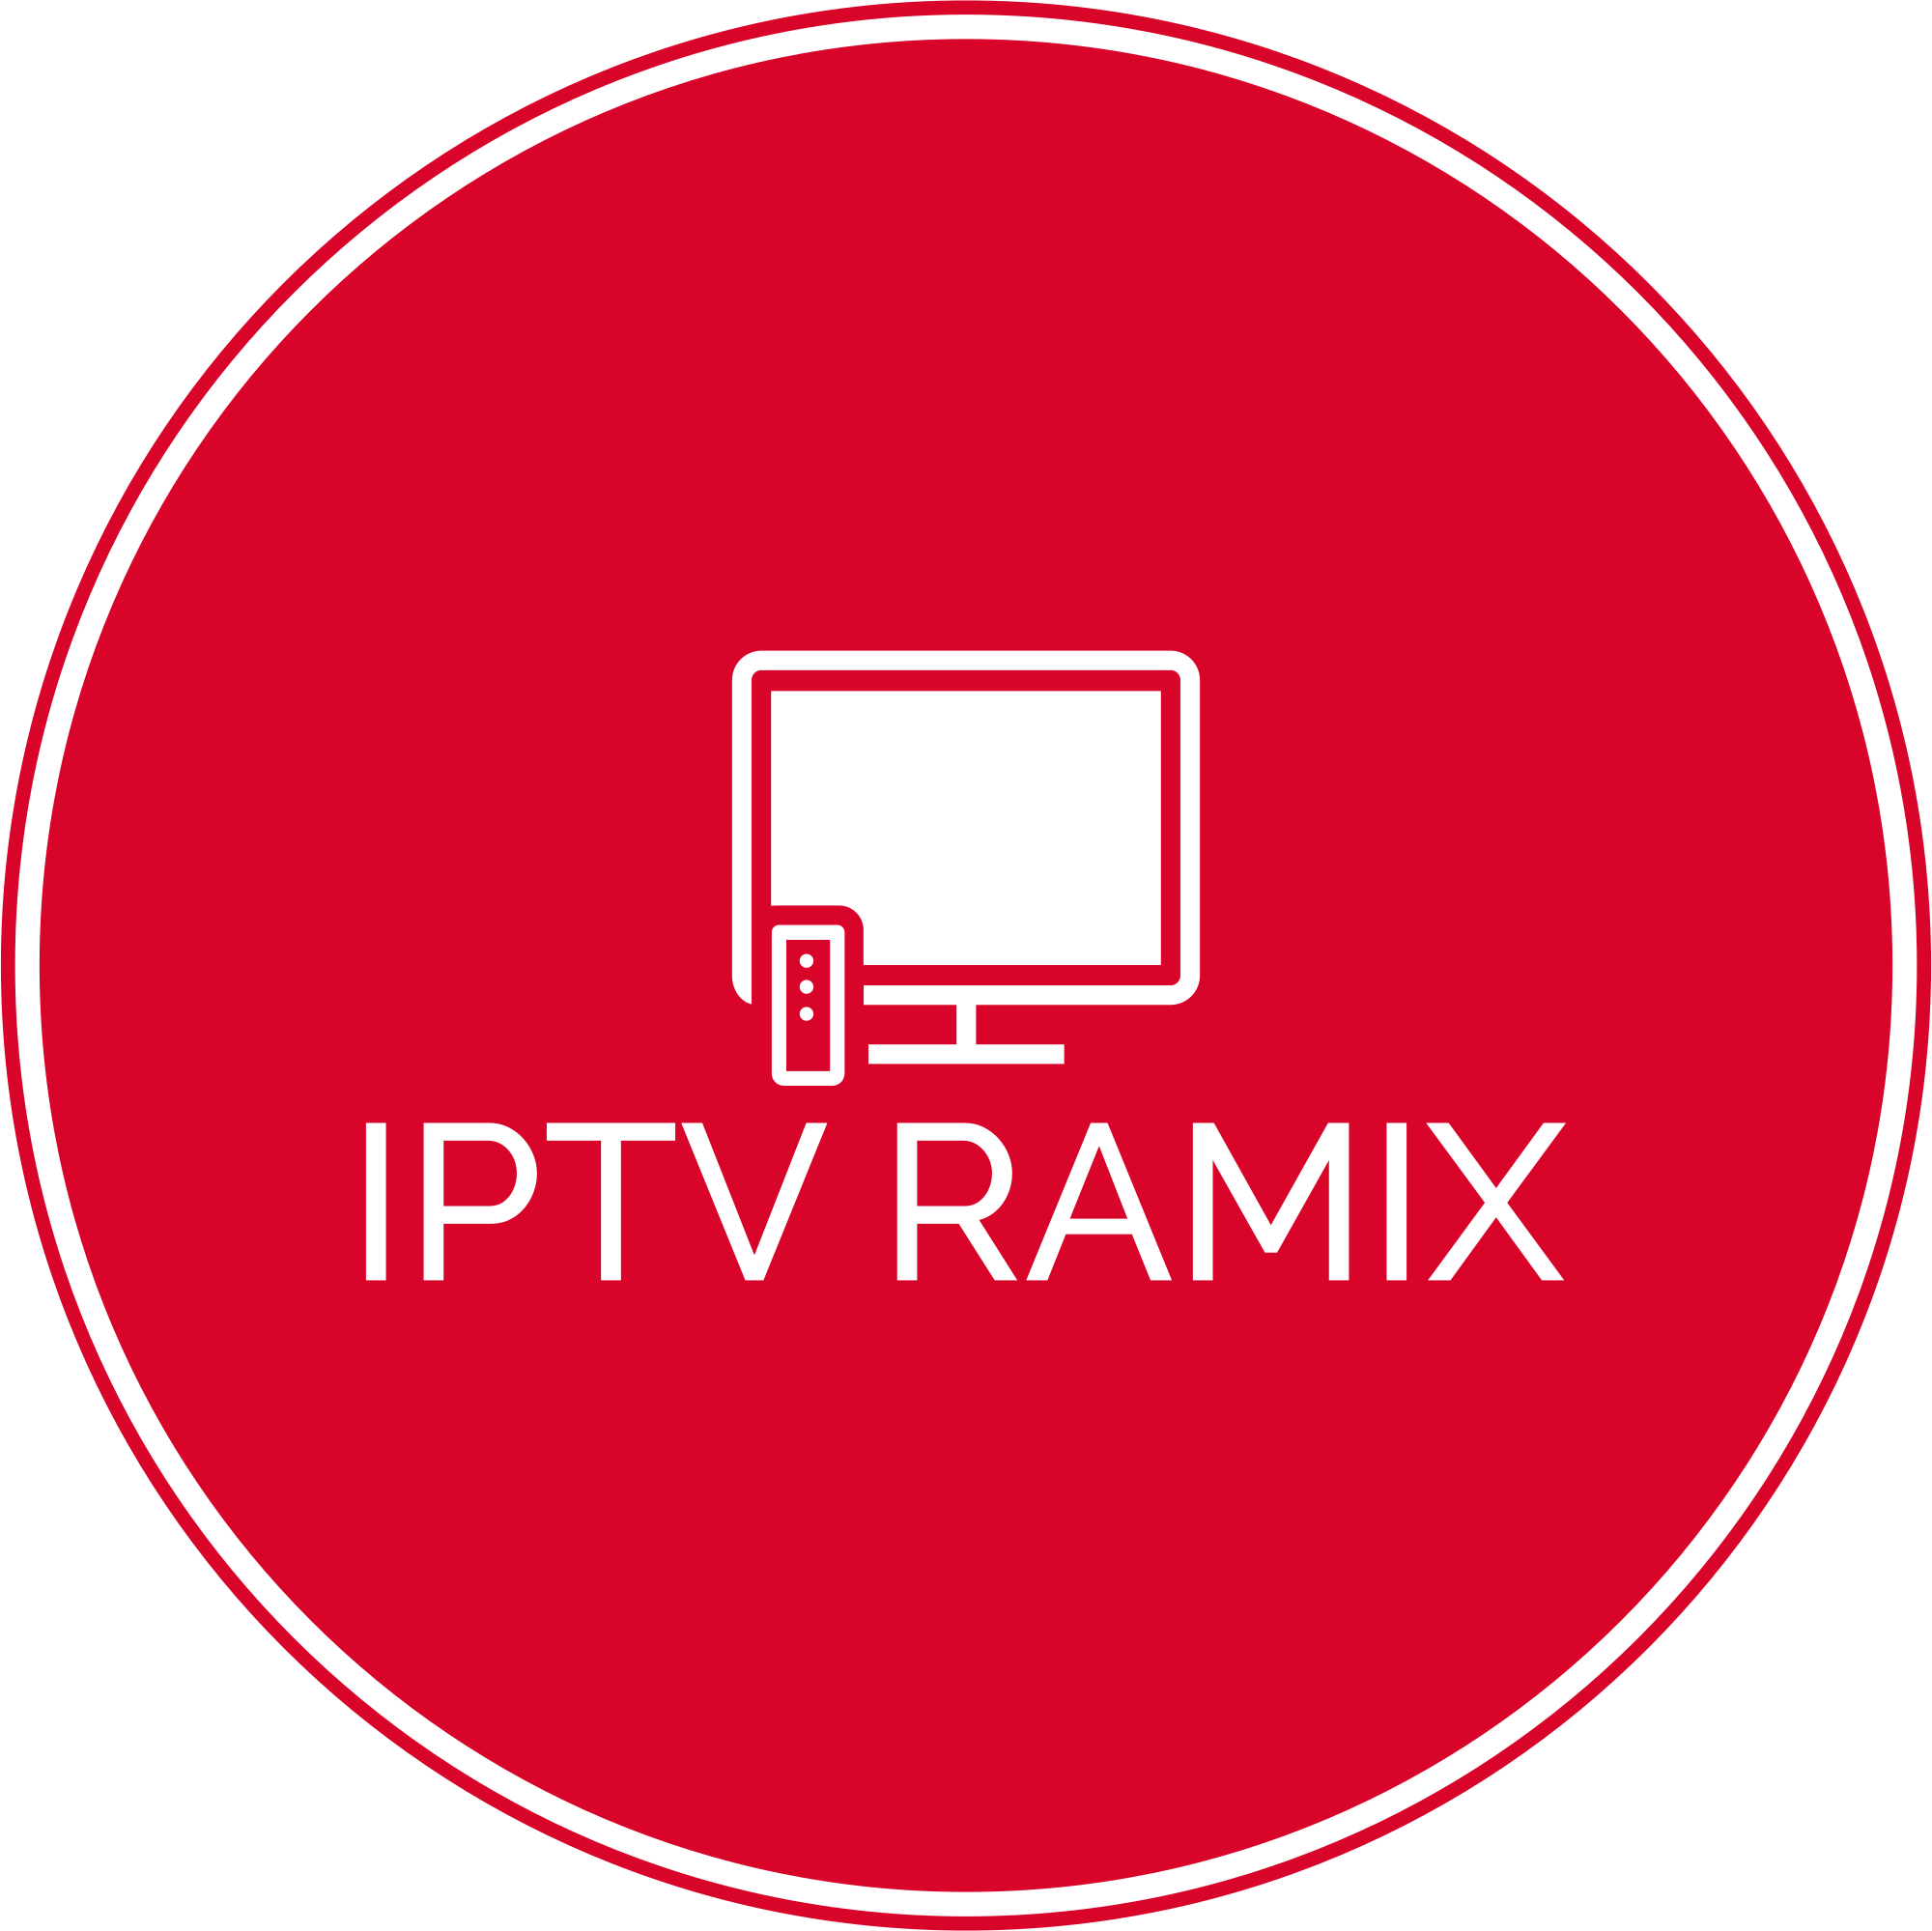 Ramix iptv service